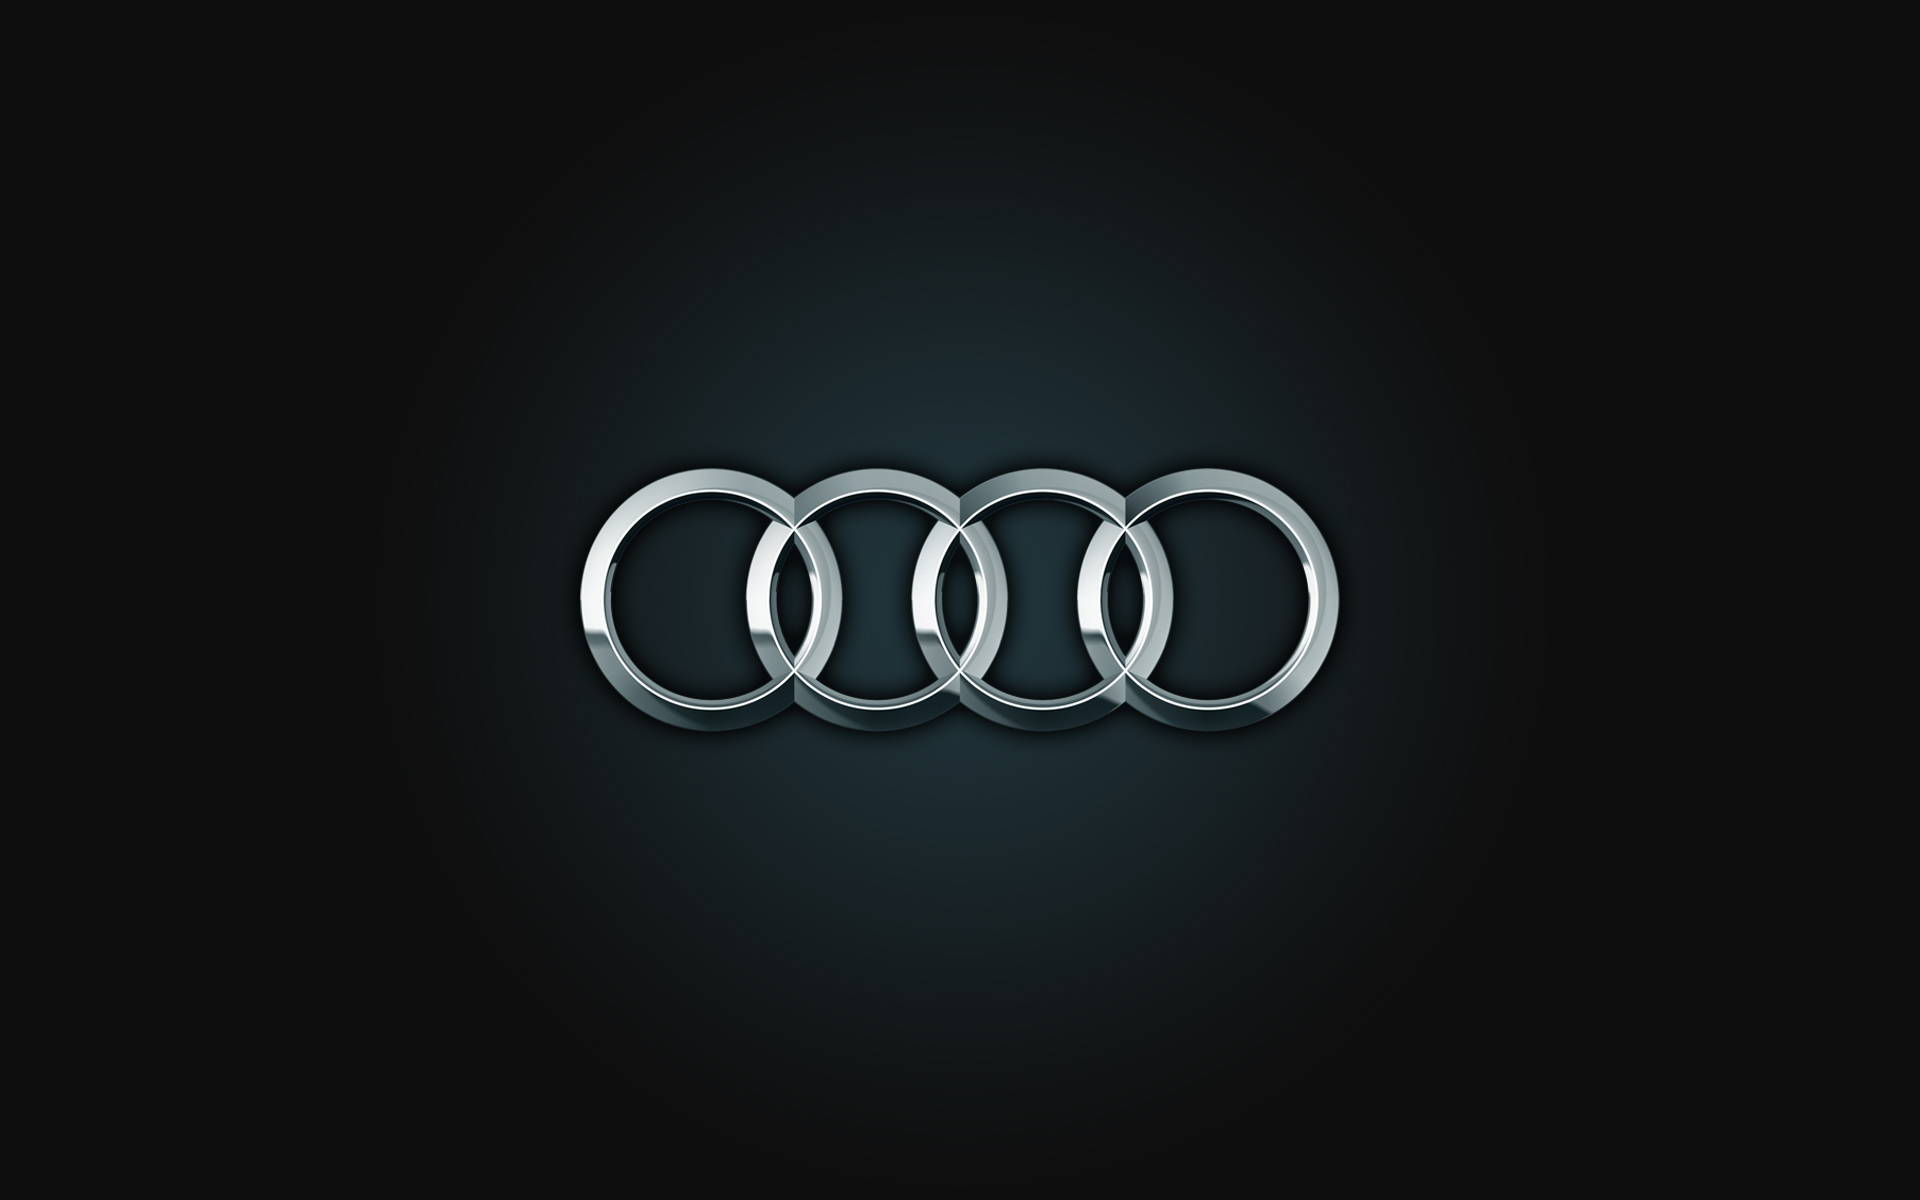 Car Logo Images Hd Download